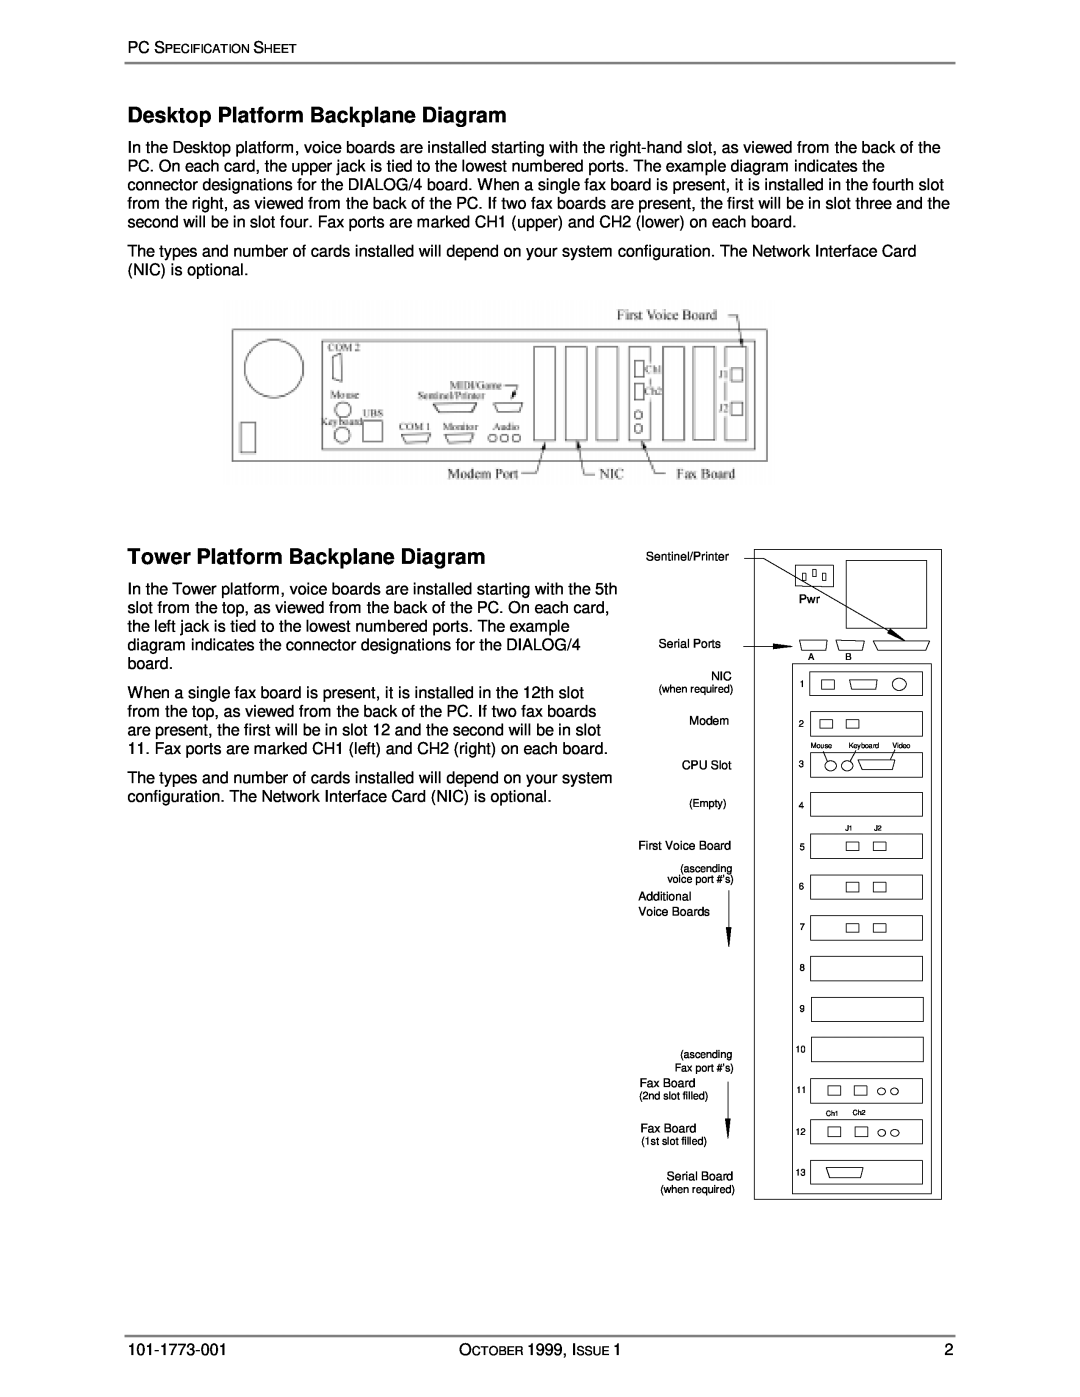 Lucent Technologies Octel 100 specifications Desktop Platform Backplane Diagram, Tower Platform Backplane Diagram 